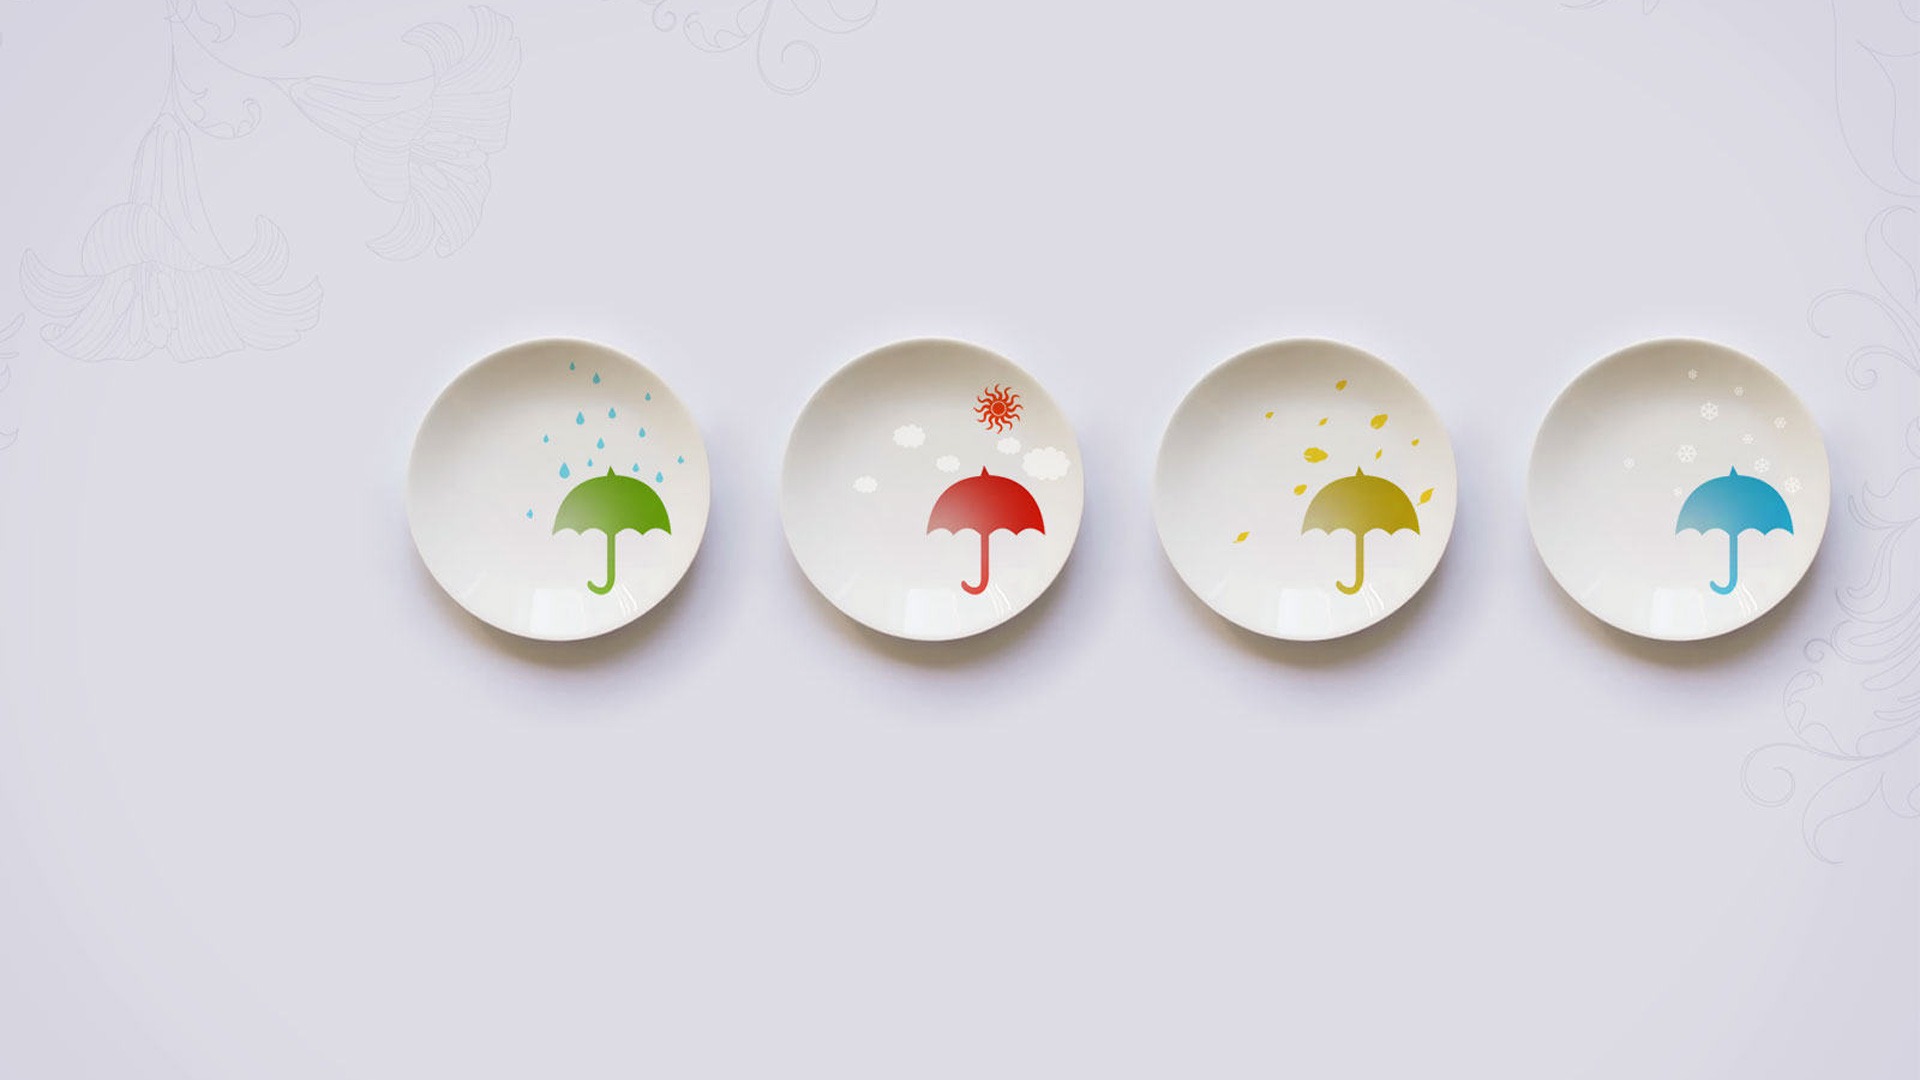 Creativity Four Seasons Plates 1920x1080